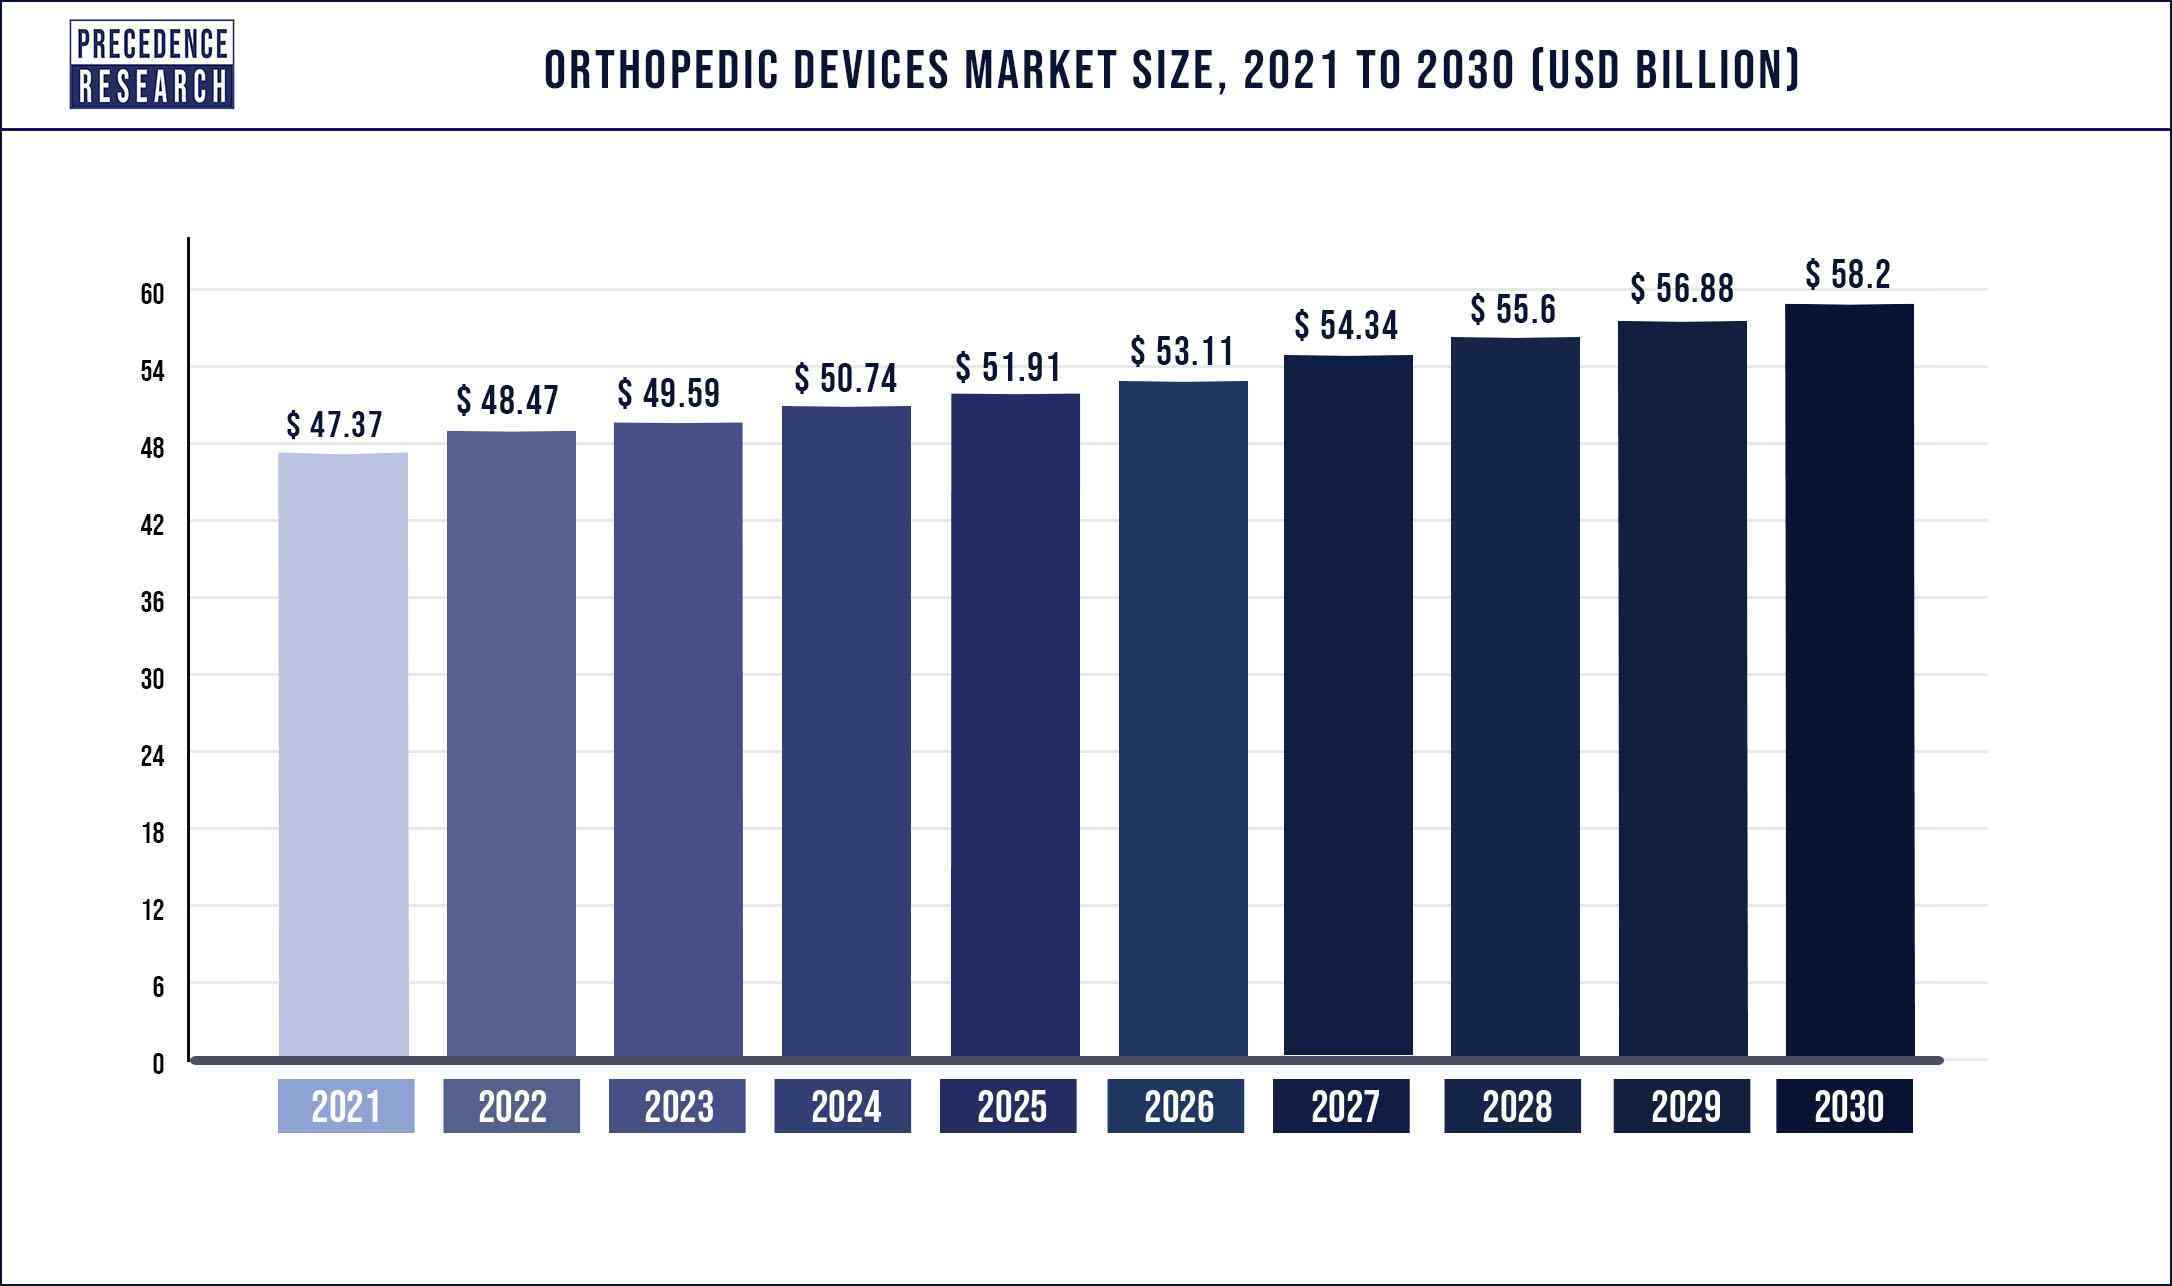 Orthopedic Devices Market Size 2021 to 2030